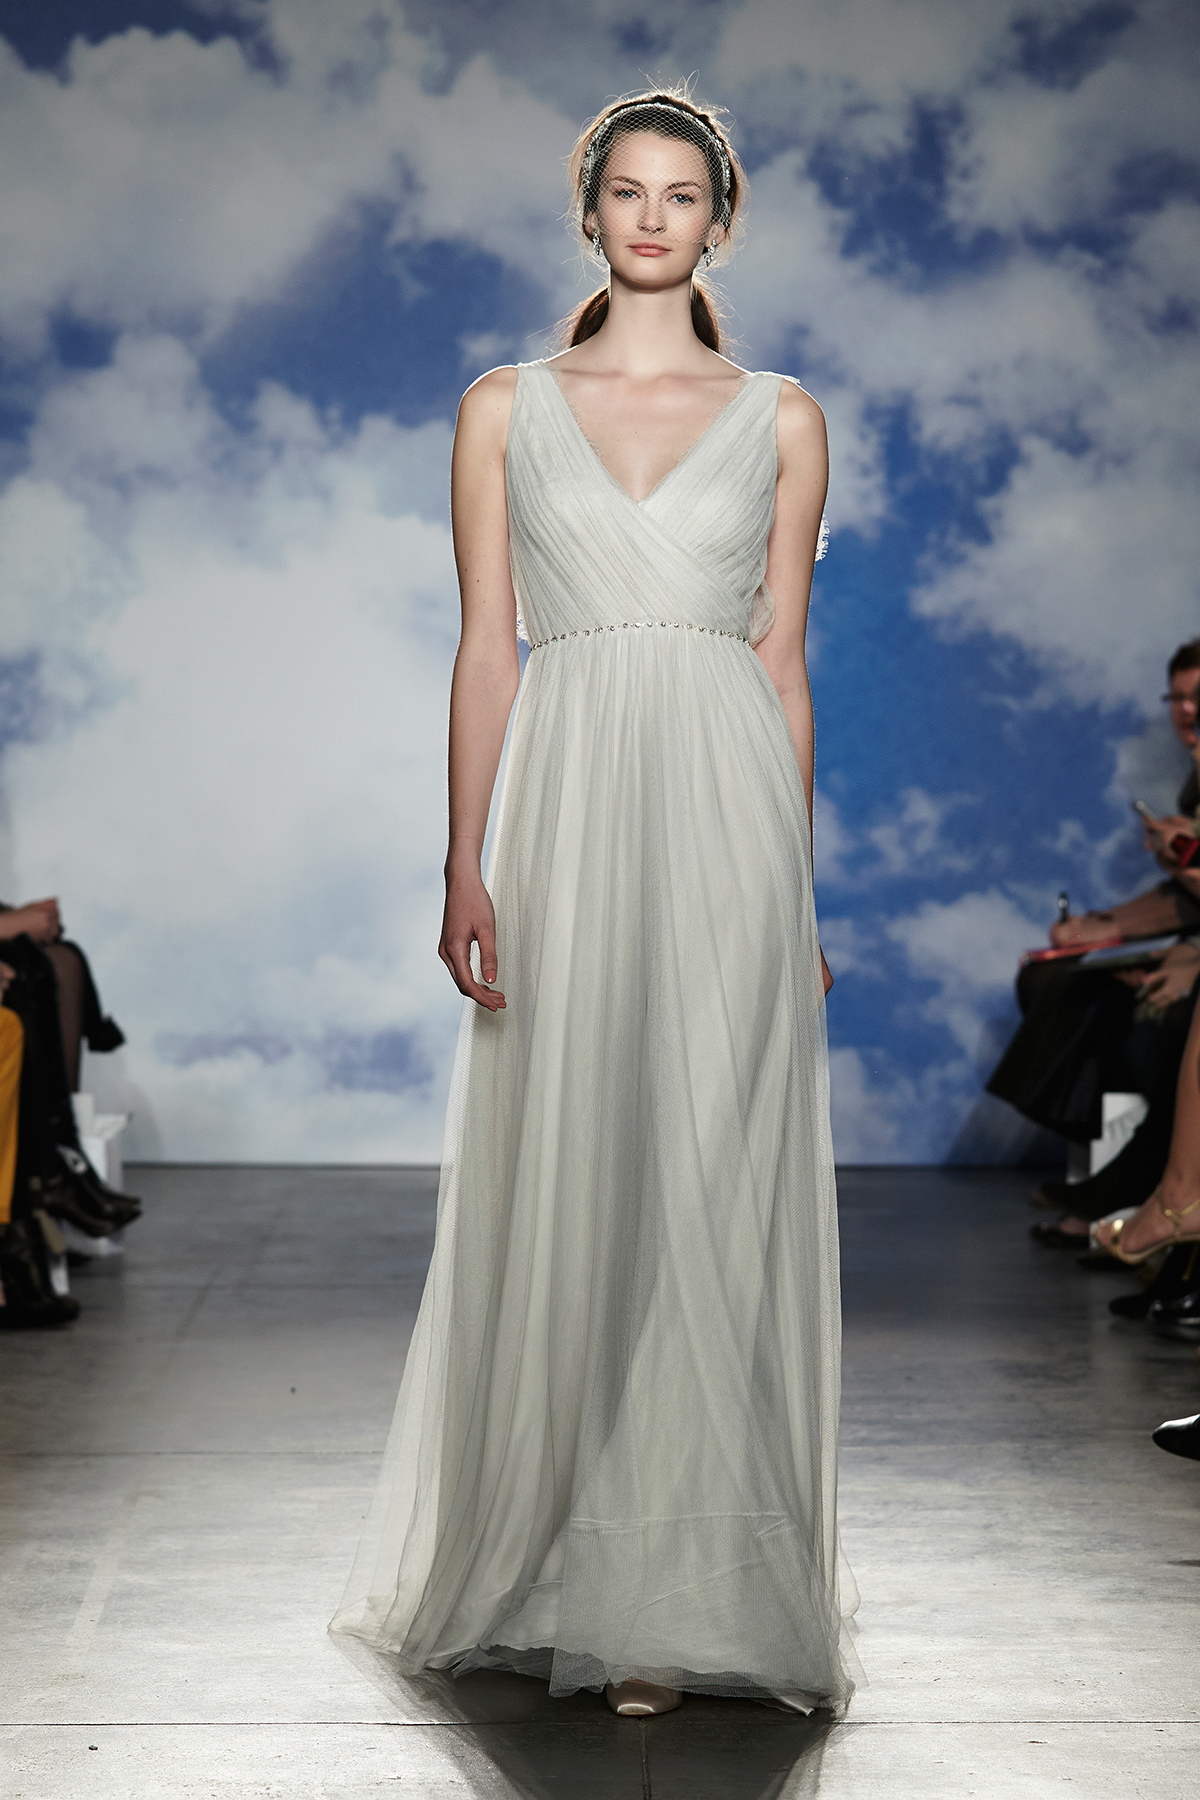 Wedding Dresses by Jenny Packham for Spring 2015